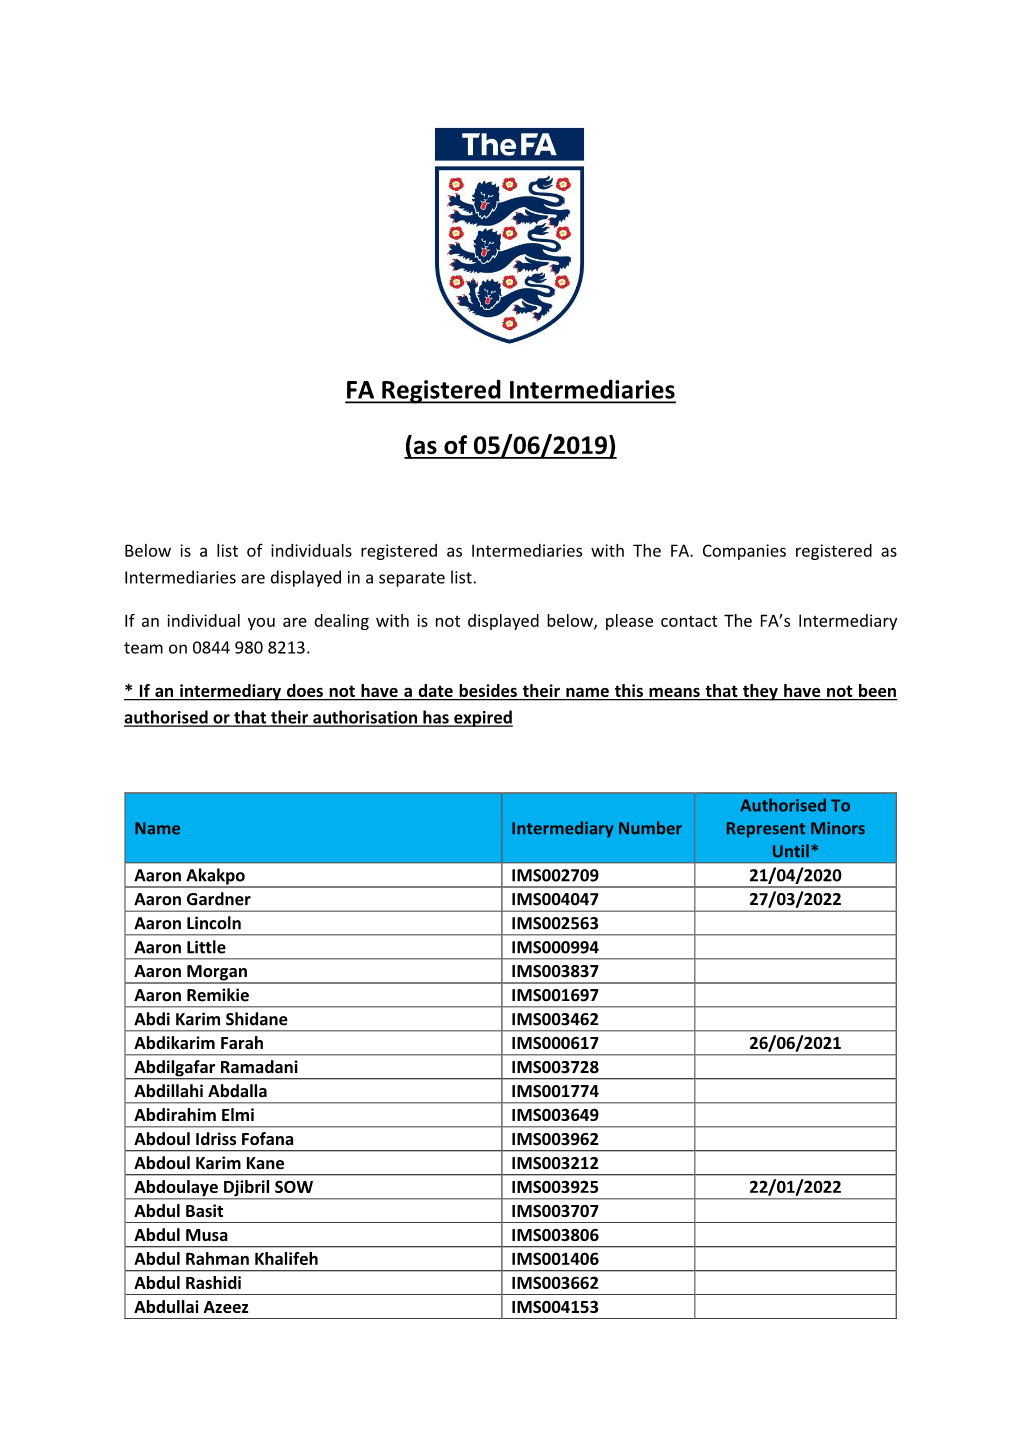 FA Registered Intermediaries (As of 05/06/2019)